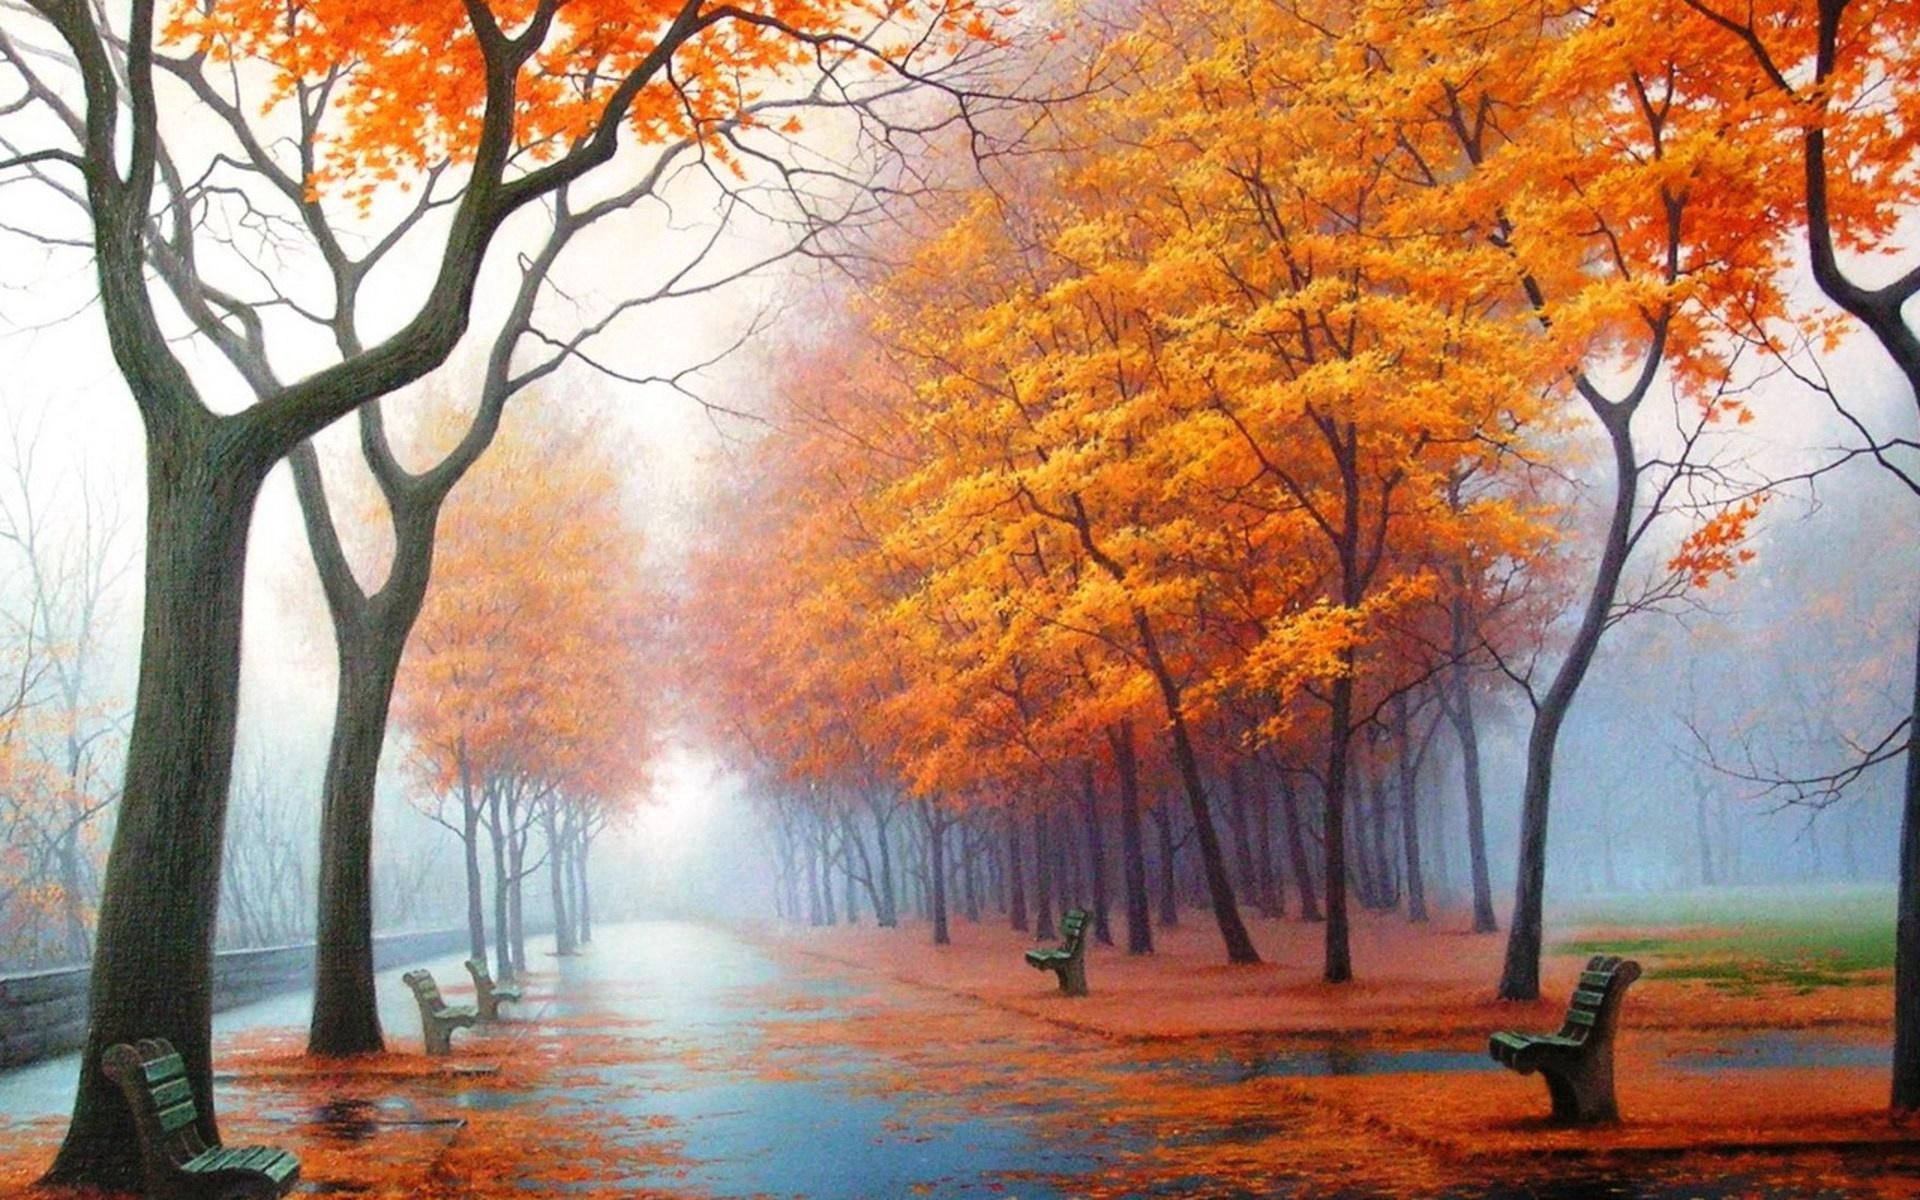 painting, fall, art, benches, autumn, nature, trees, park, fog, asphalt, leaf fall, alley, haze, track, steam